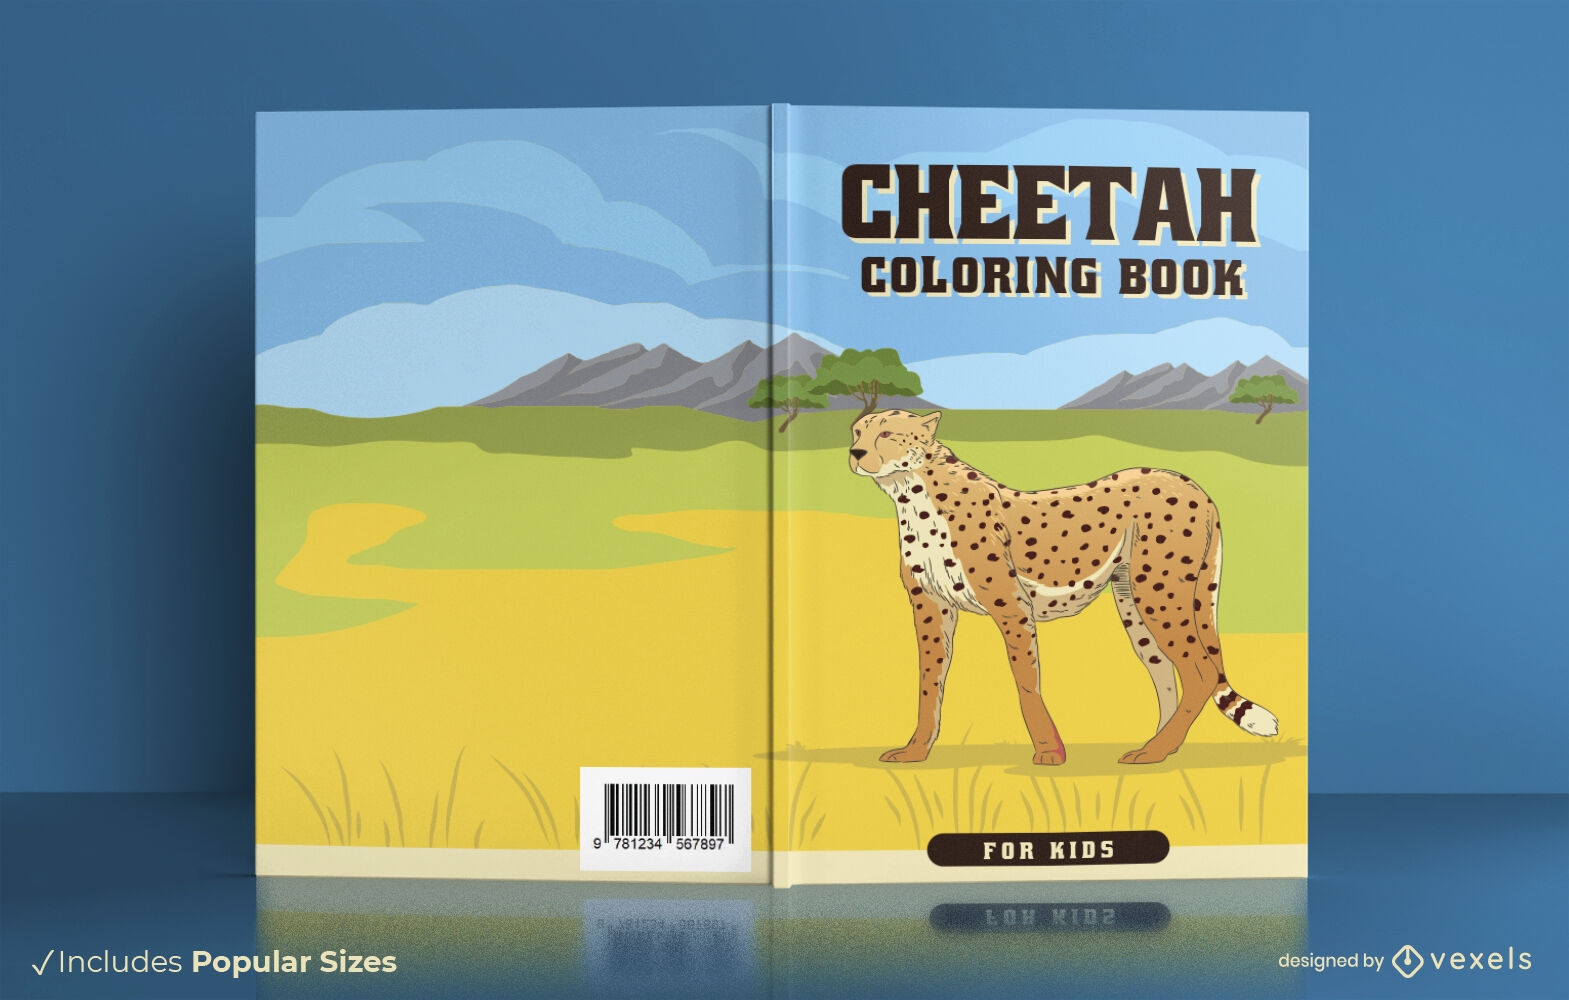 Cheetah in the jungle book cover design